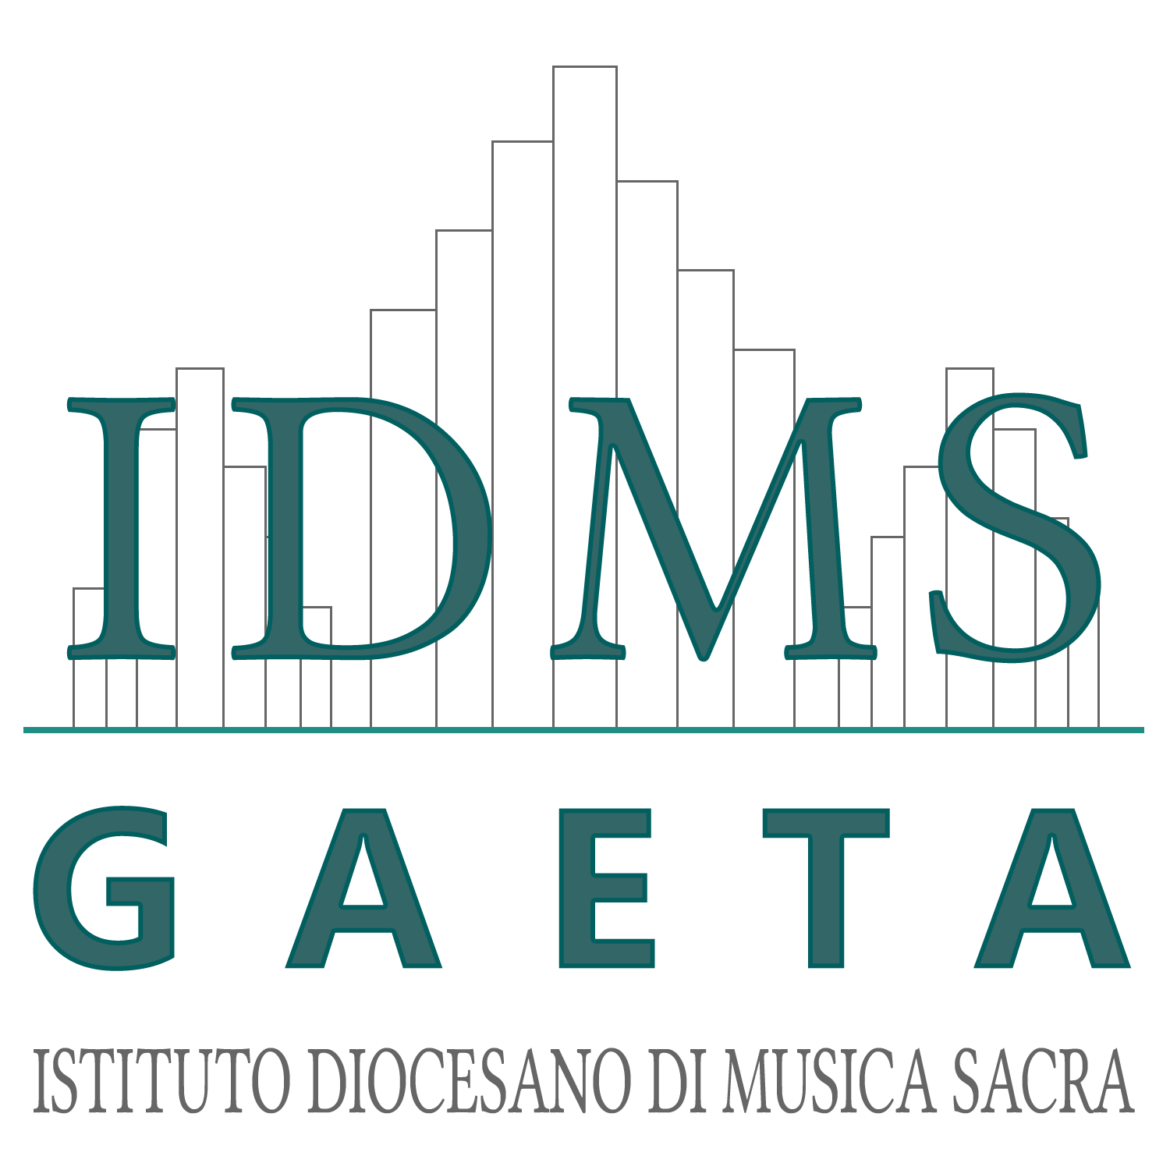 logo-IDMS-GAETA-col-def2@3x.png